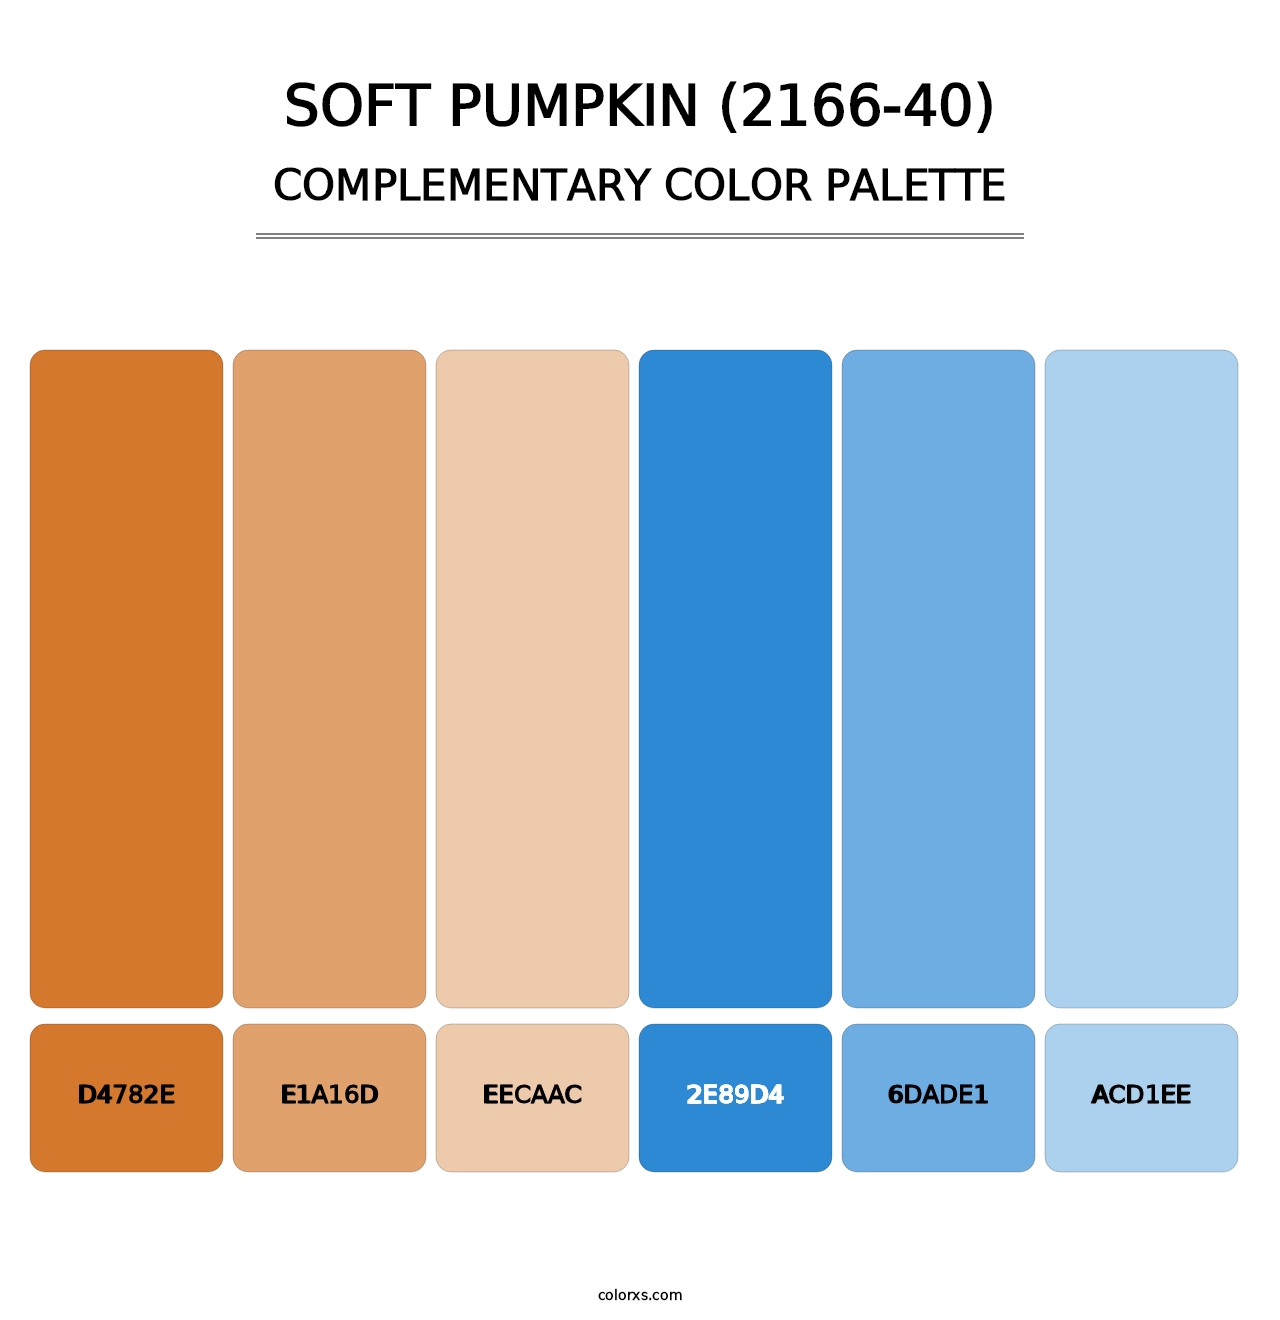 Soft Pumpkin (2166-40) - Complementary Color Palette